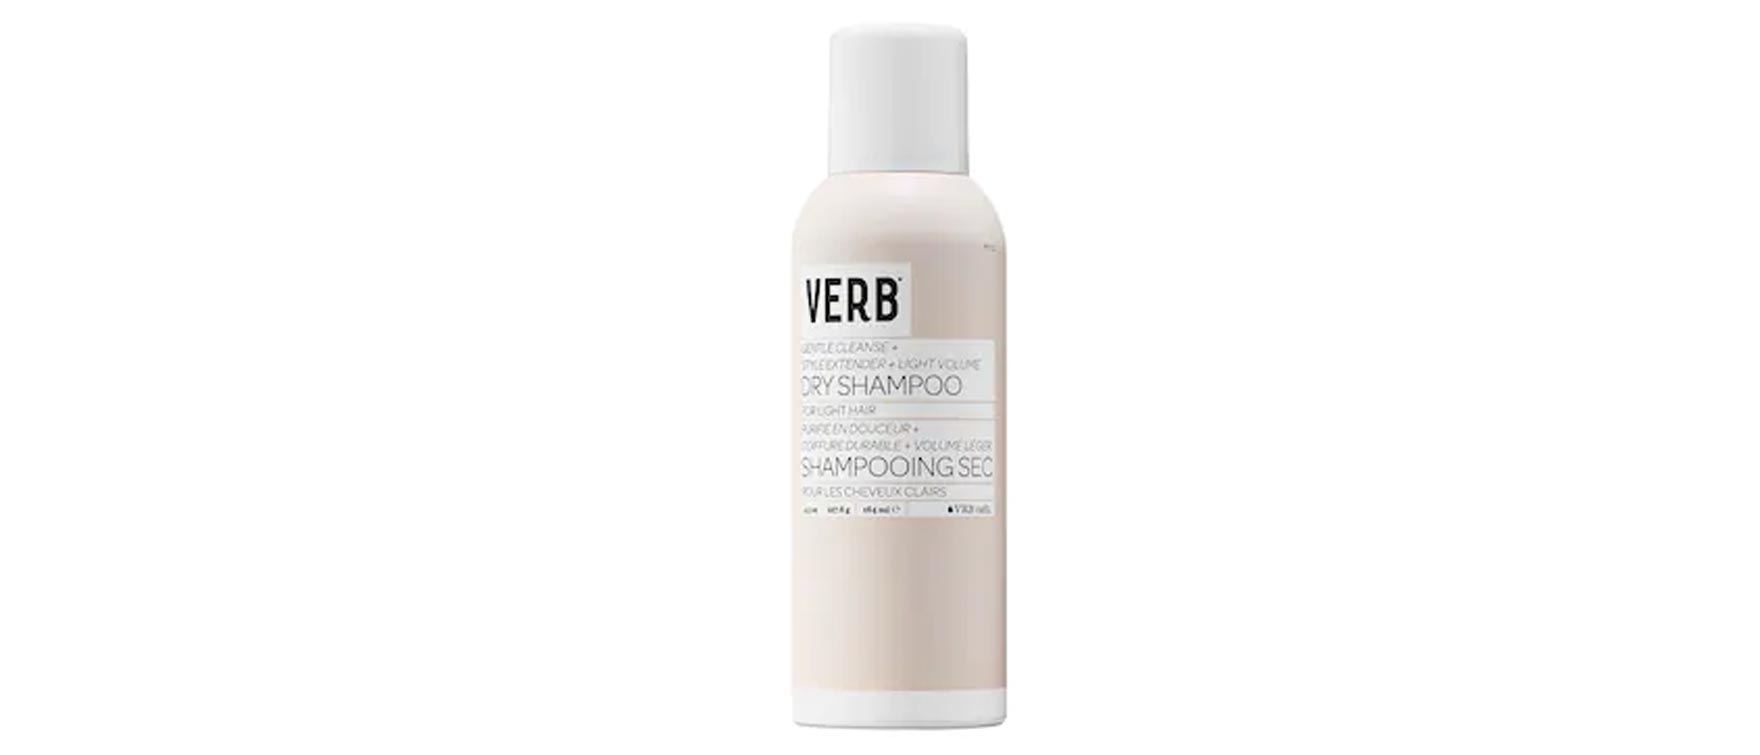 5. Verb Dry Shampoo for Light Hair